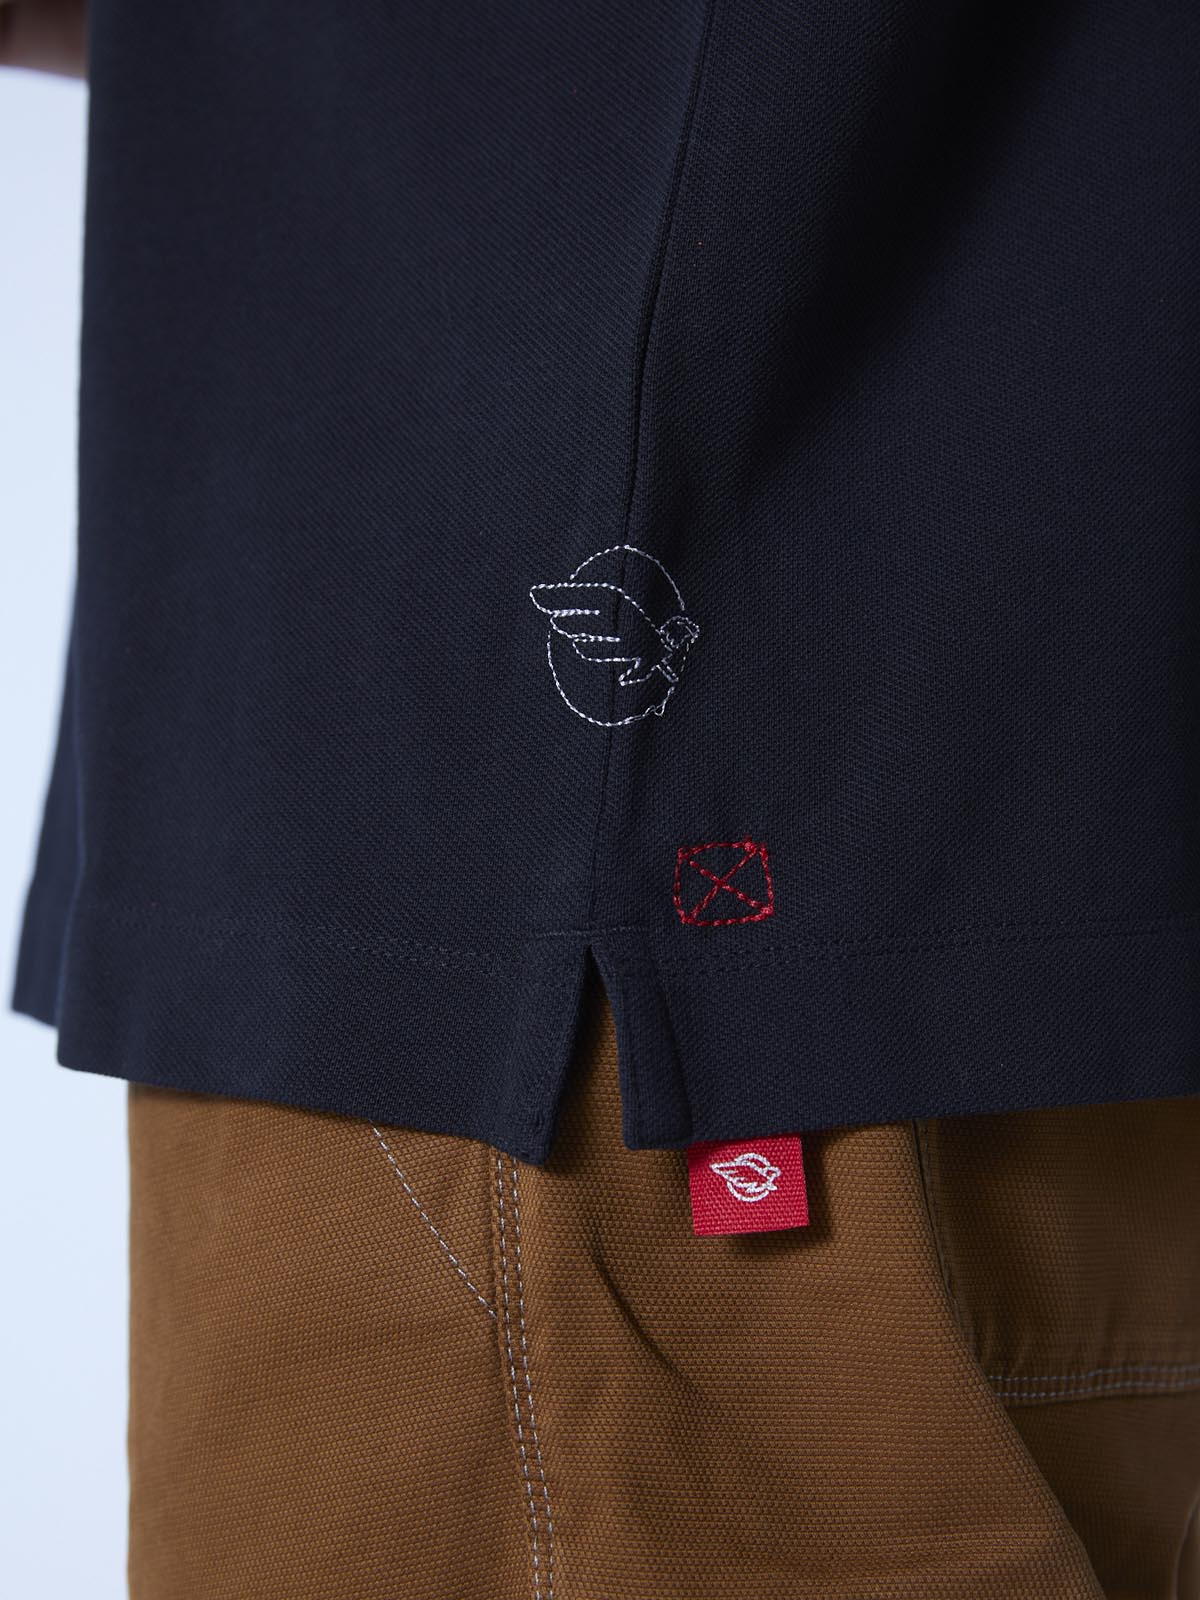 Baran parachute embroidered Polo shirt